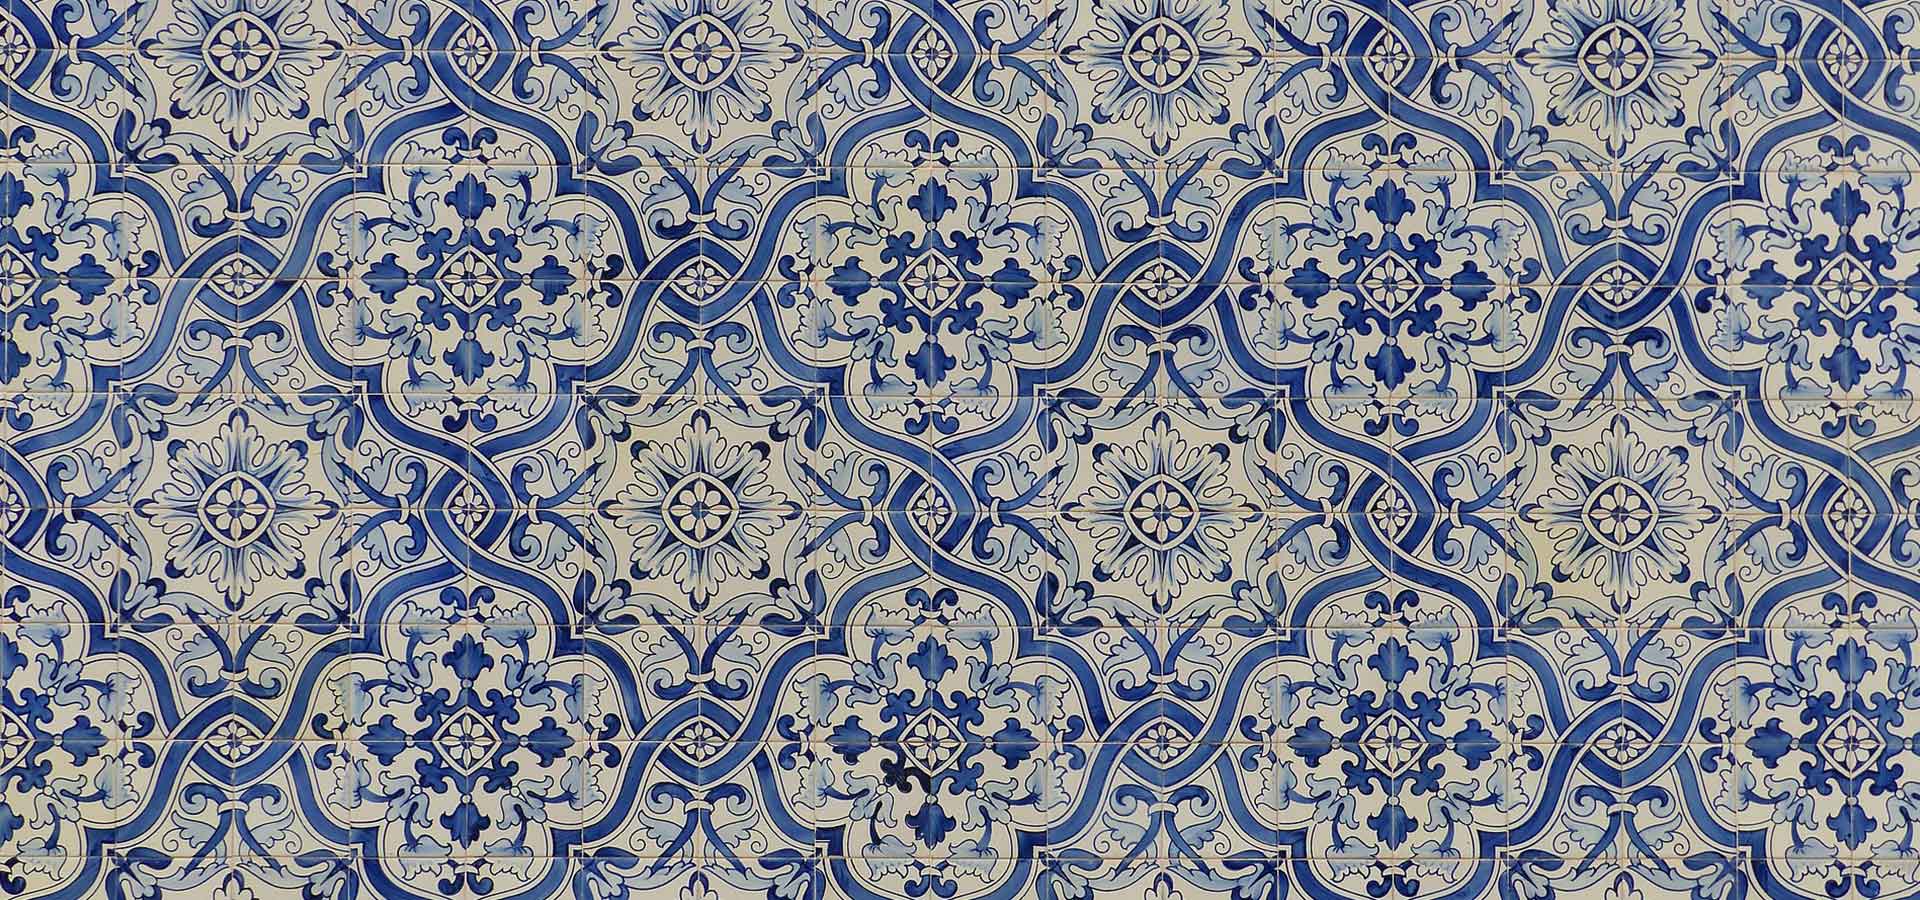 Voyages-Traditours-Portugal-azulejos-art